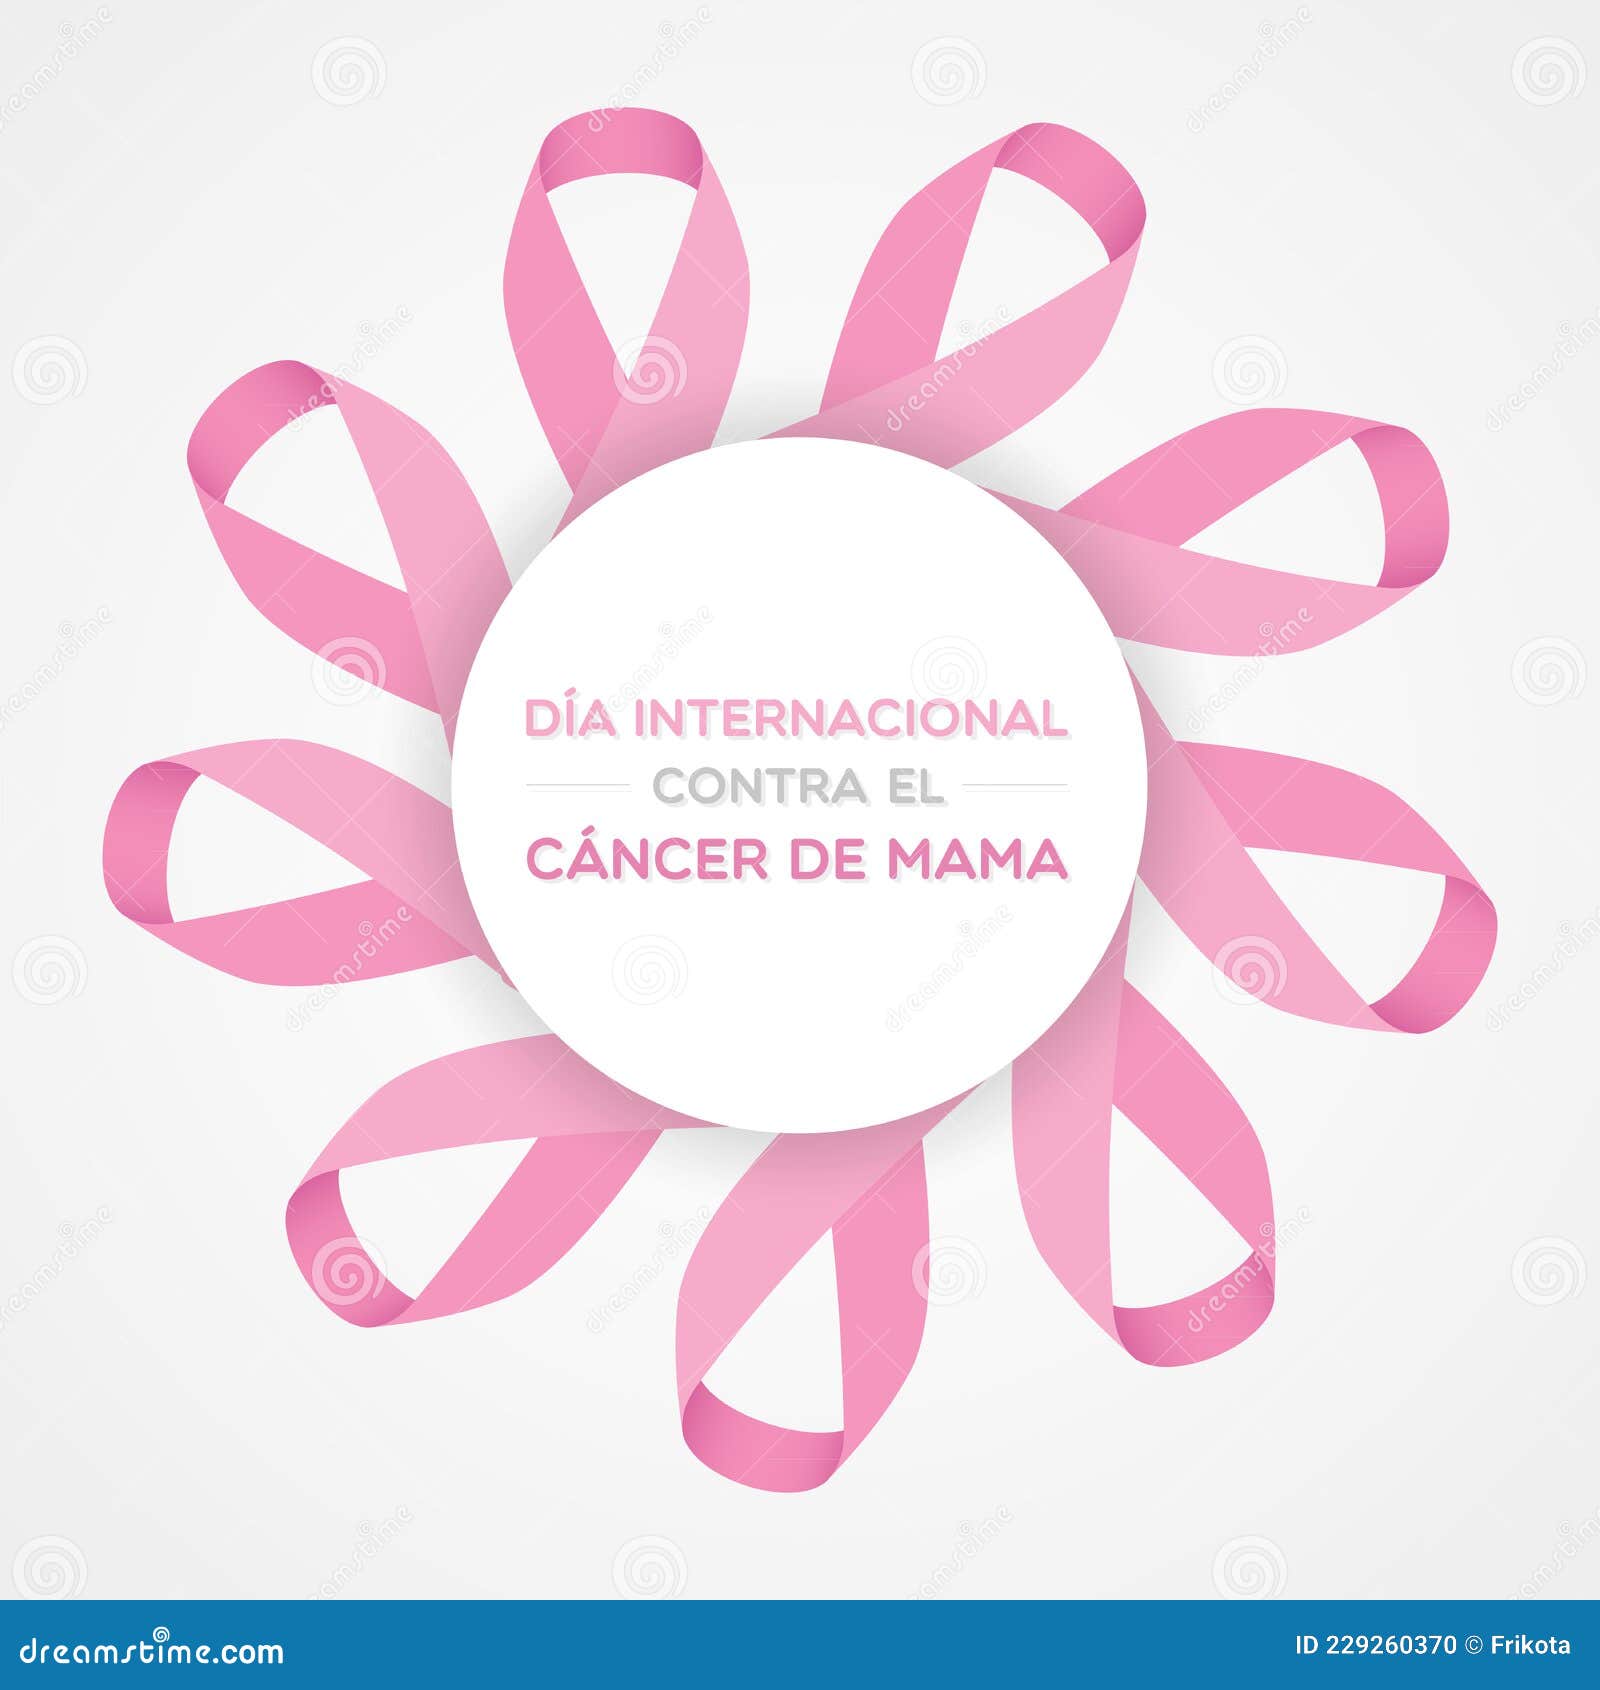 international day of breast cancer in spanish. dia internacional contra el cancer de mama. spanish.  , flat